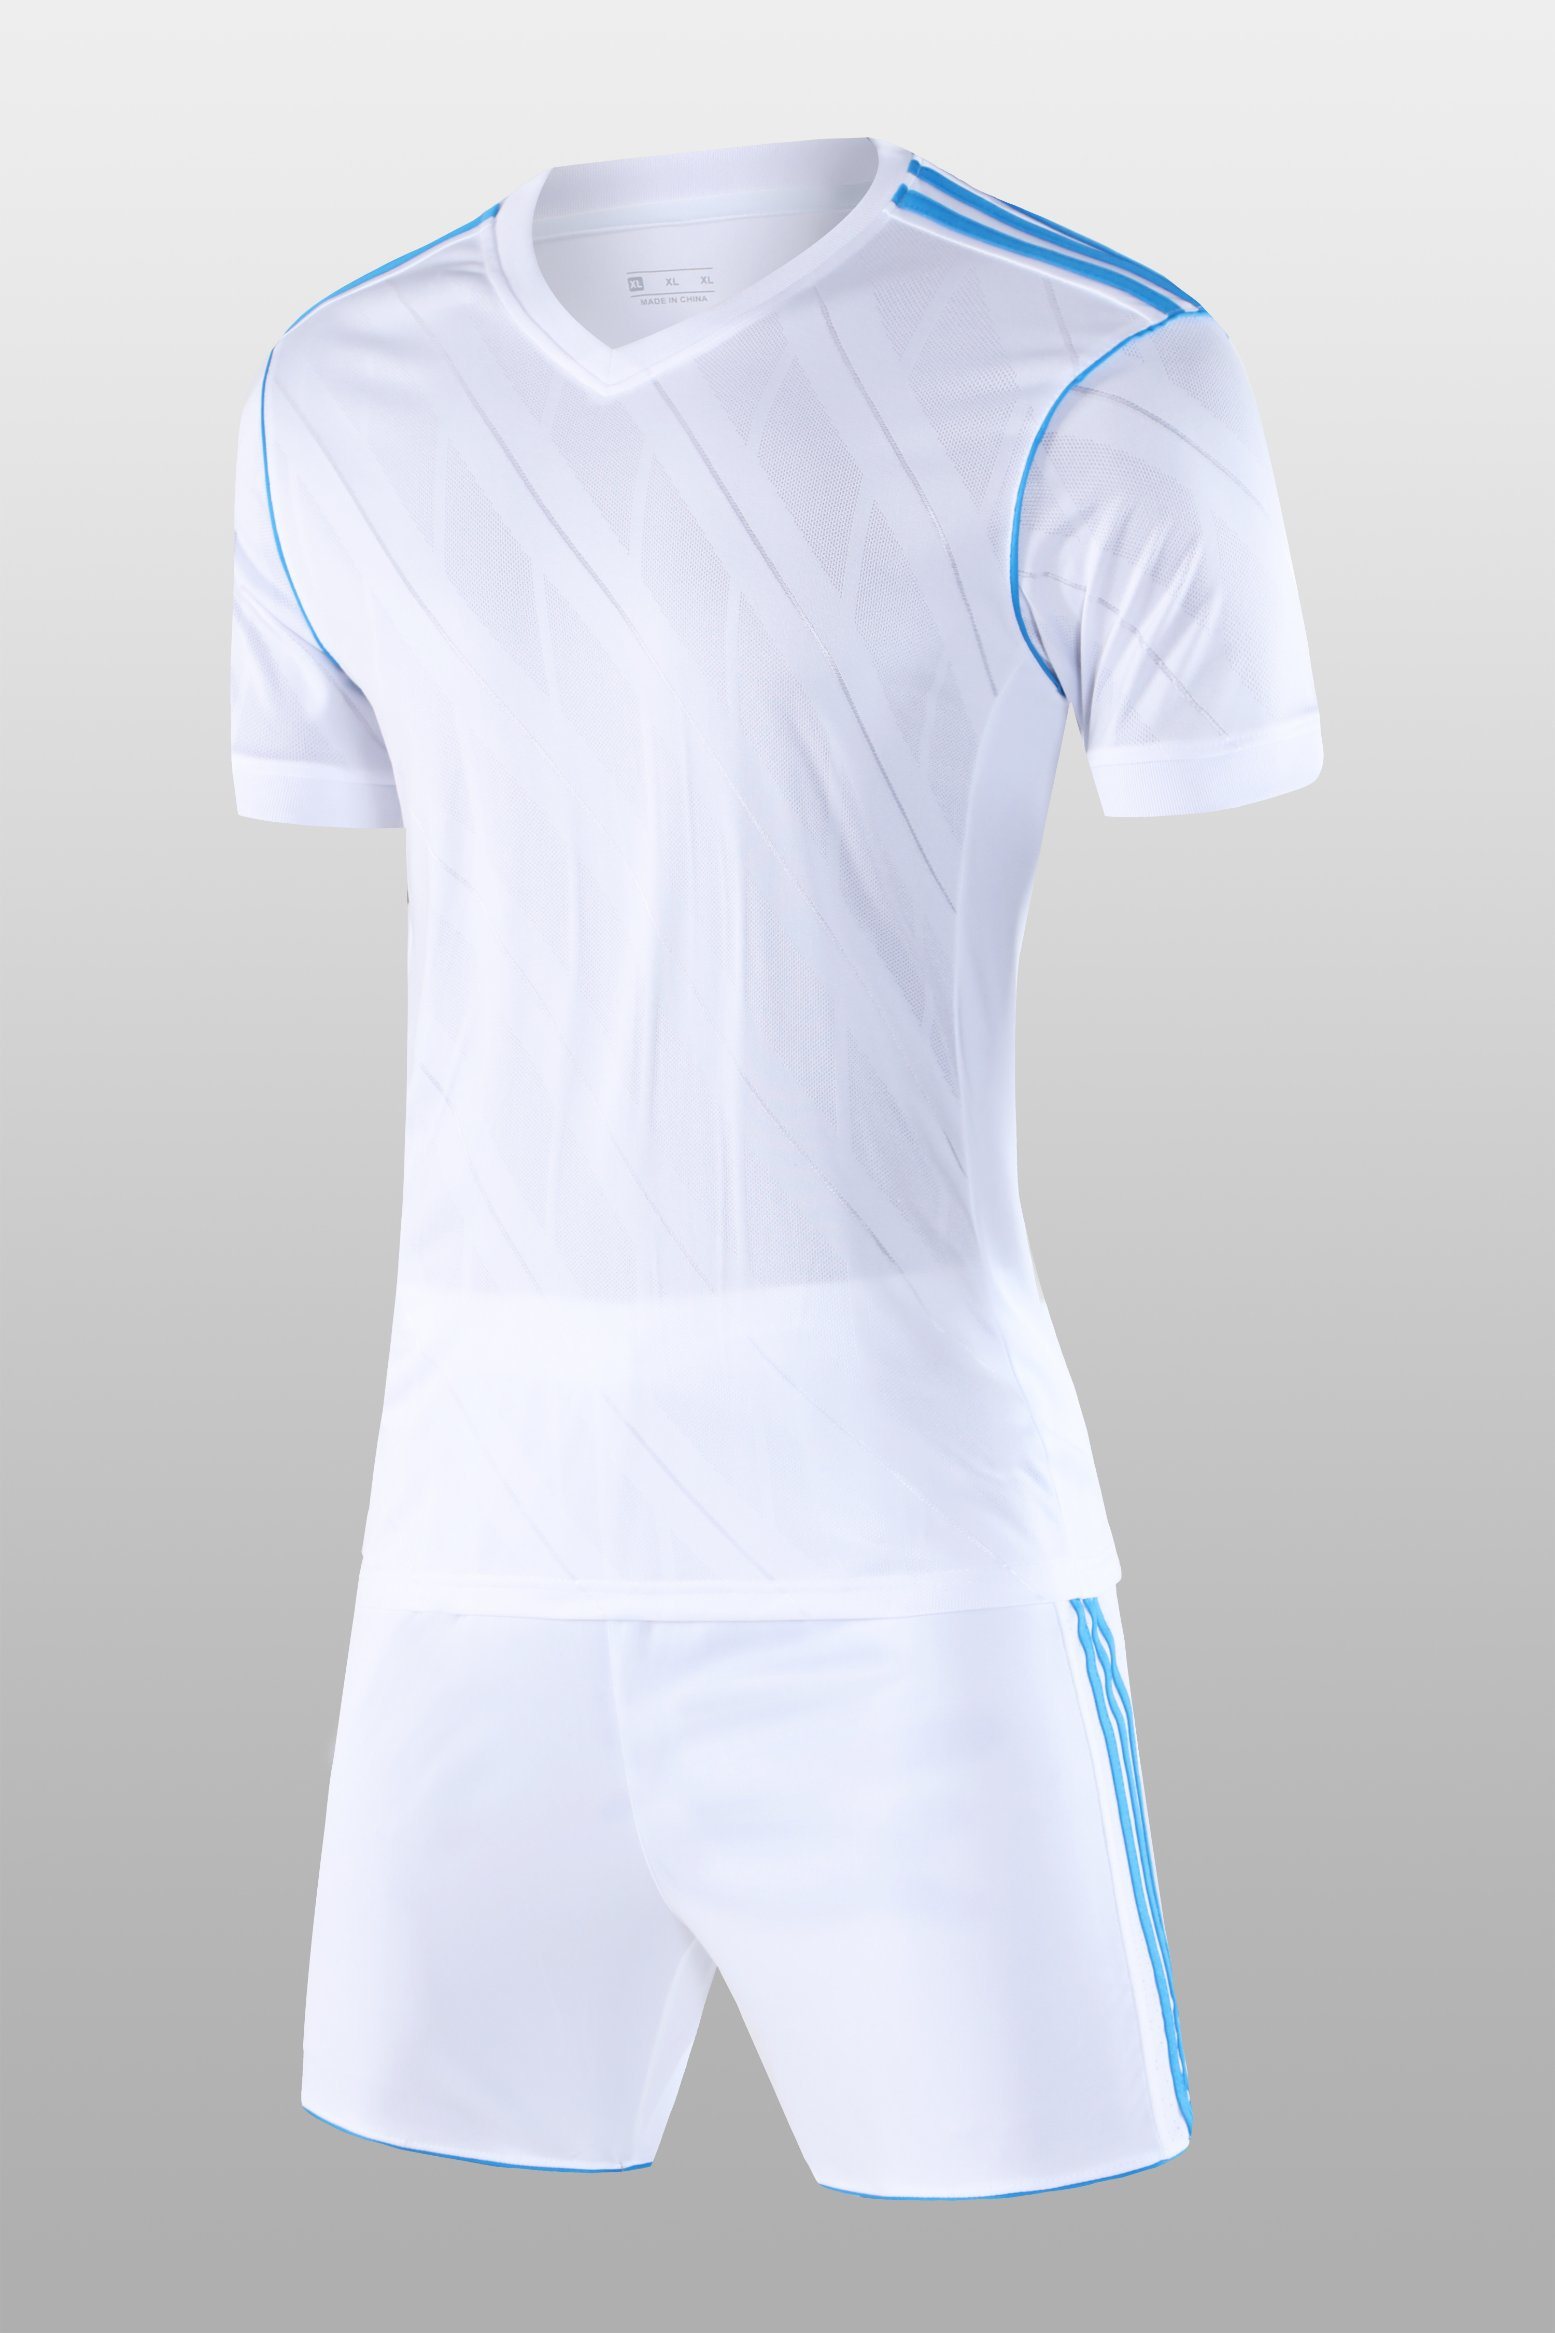 Wholesale 2017 Madrid Club Team Cheap Best Quality Short Sleeve Soccer Jersey Set Football Training Set